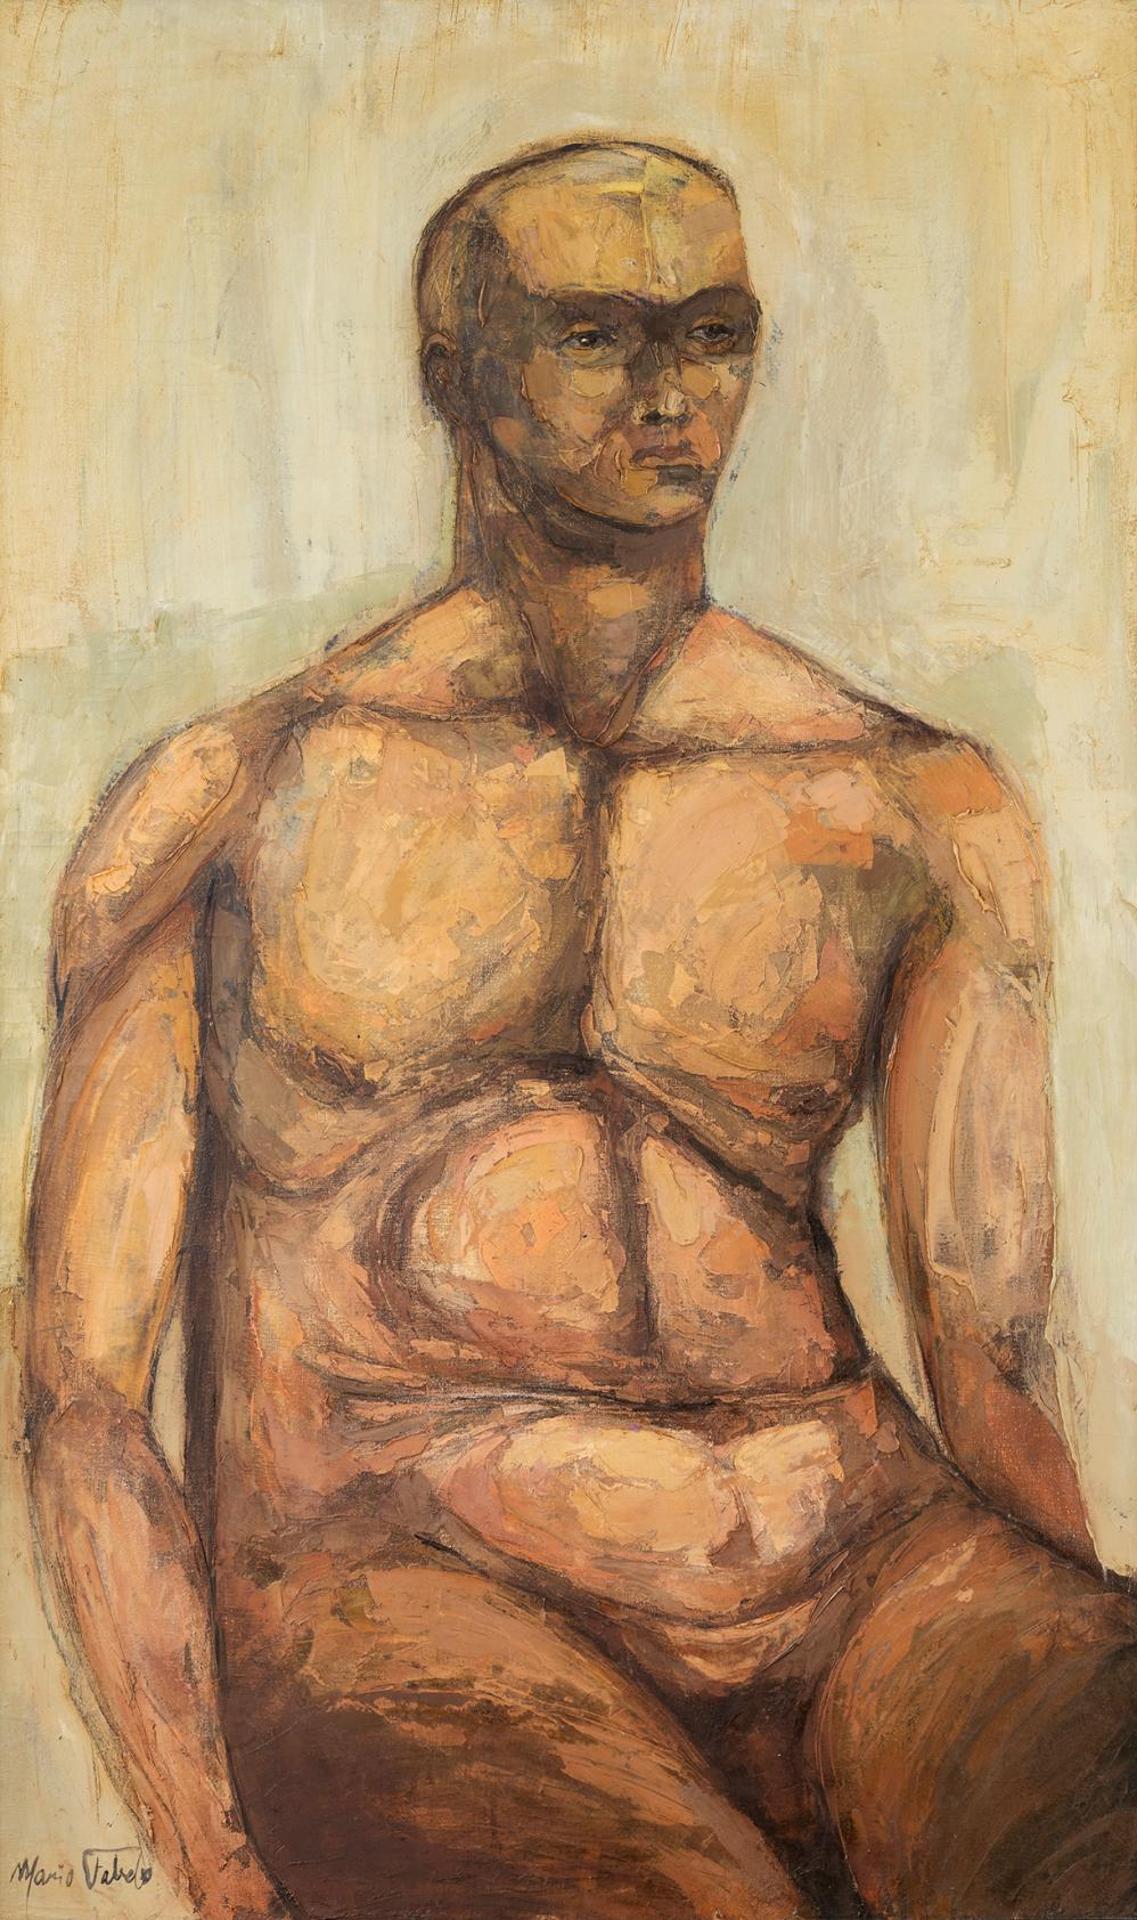 Mario Fabelo Estrada - Untitled - Male Nude Seated